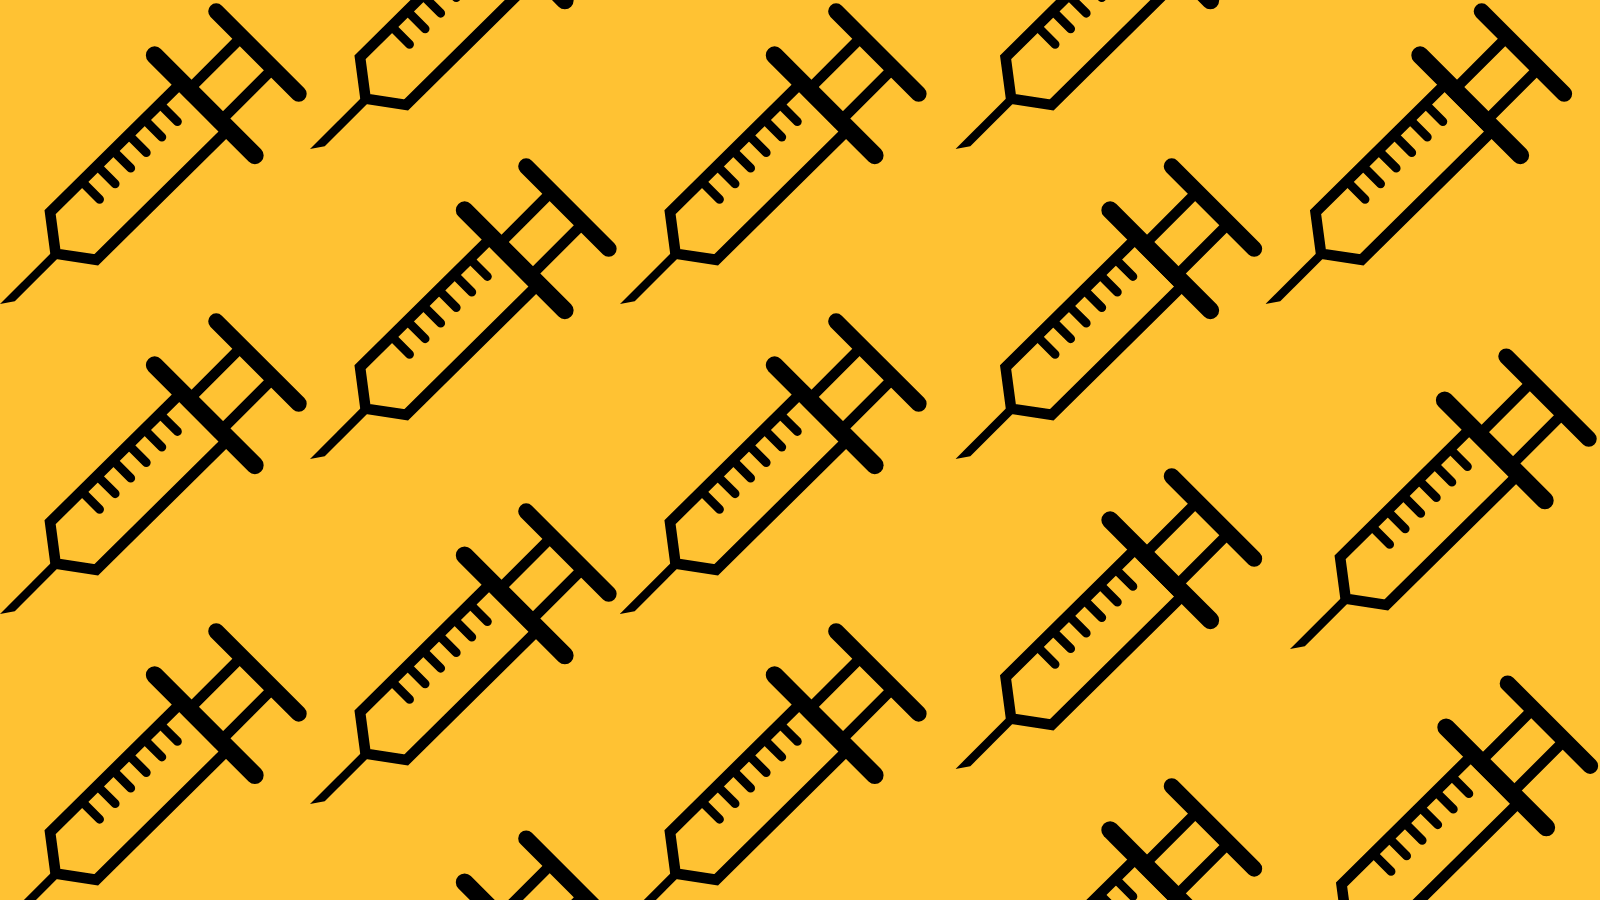 Several syringe graphics